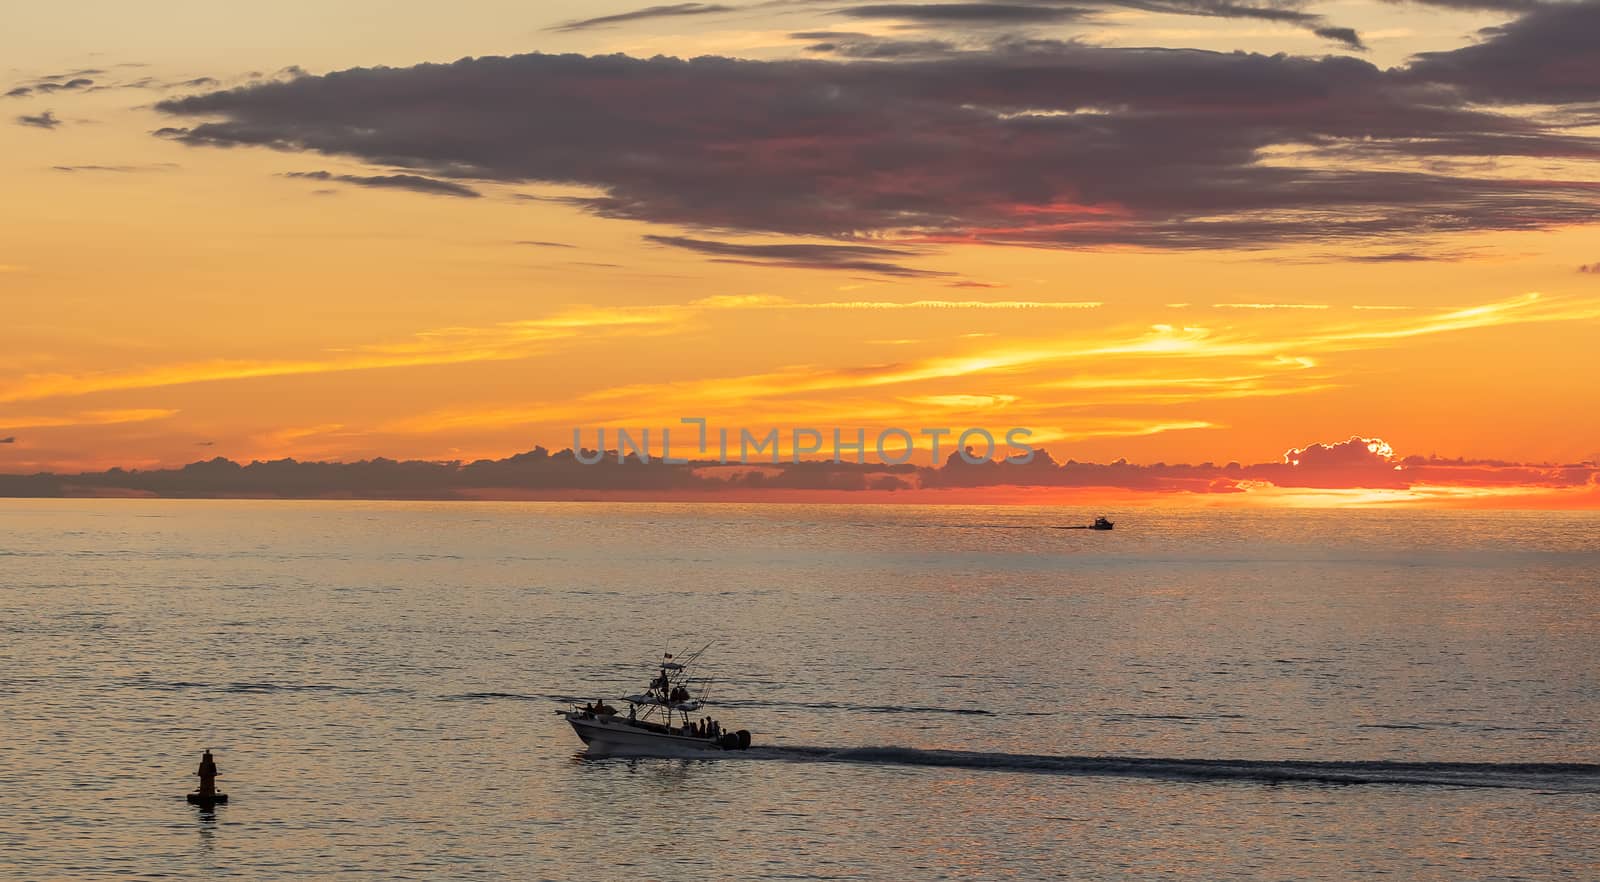 Fishing boat sailing at sunset in Mexico. Beautiful sky by DamantisZ